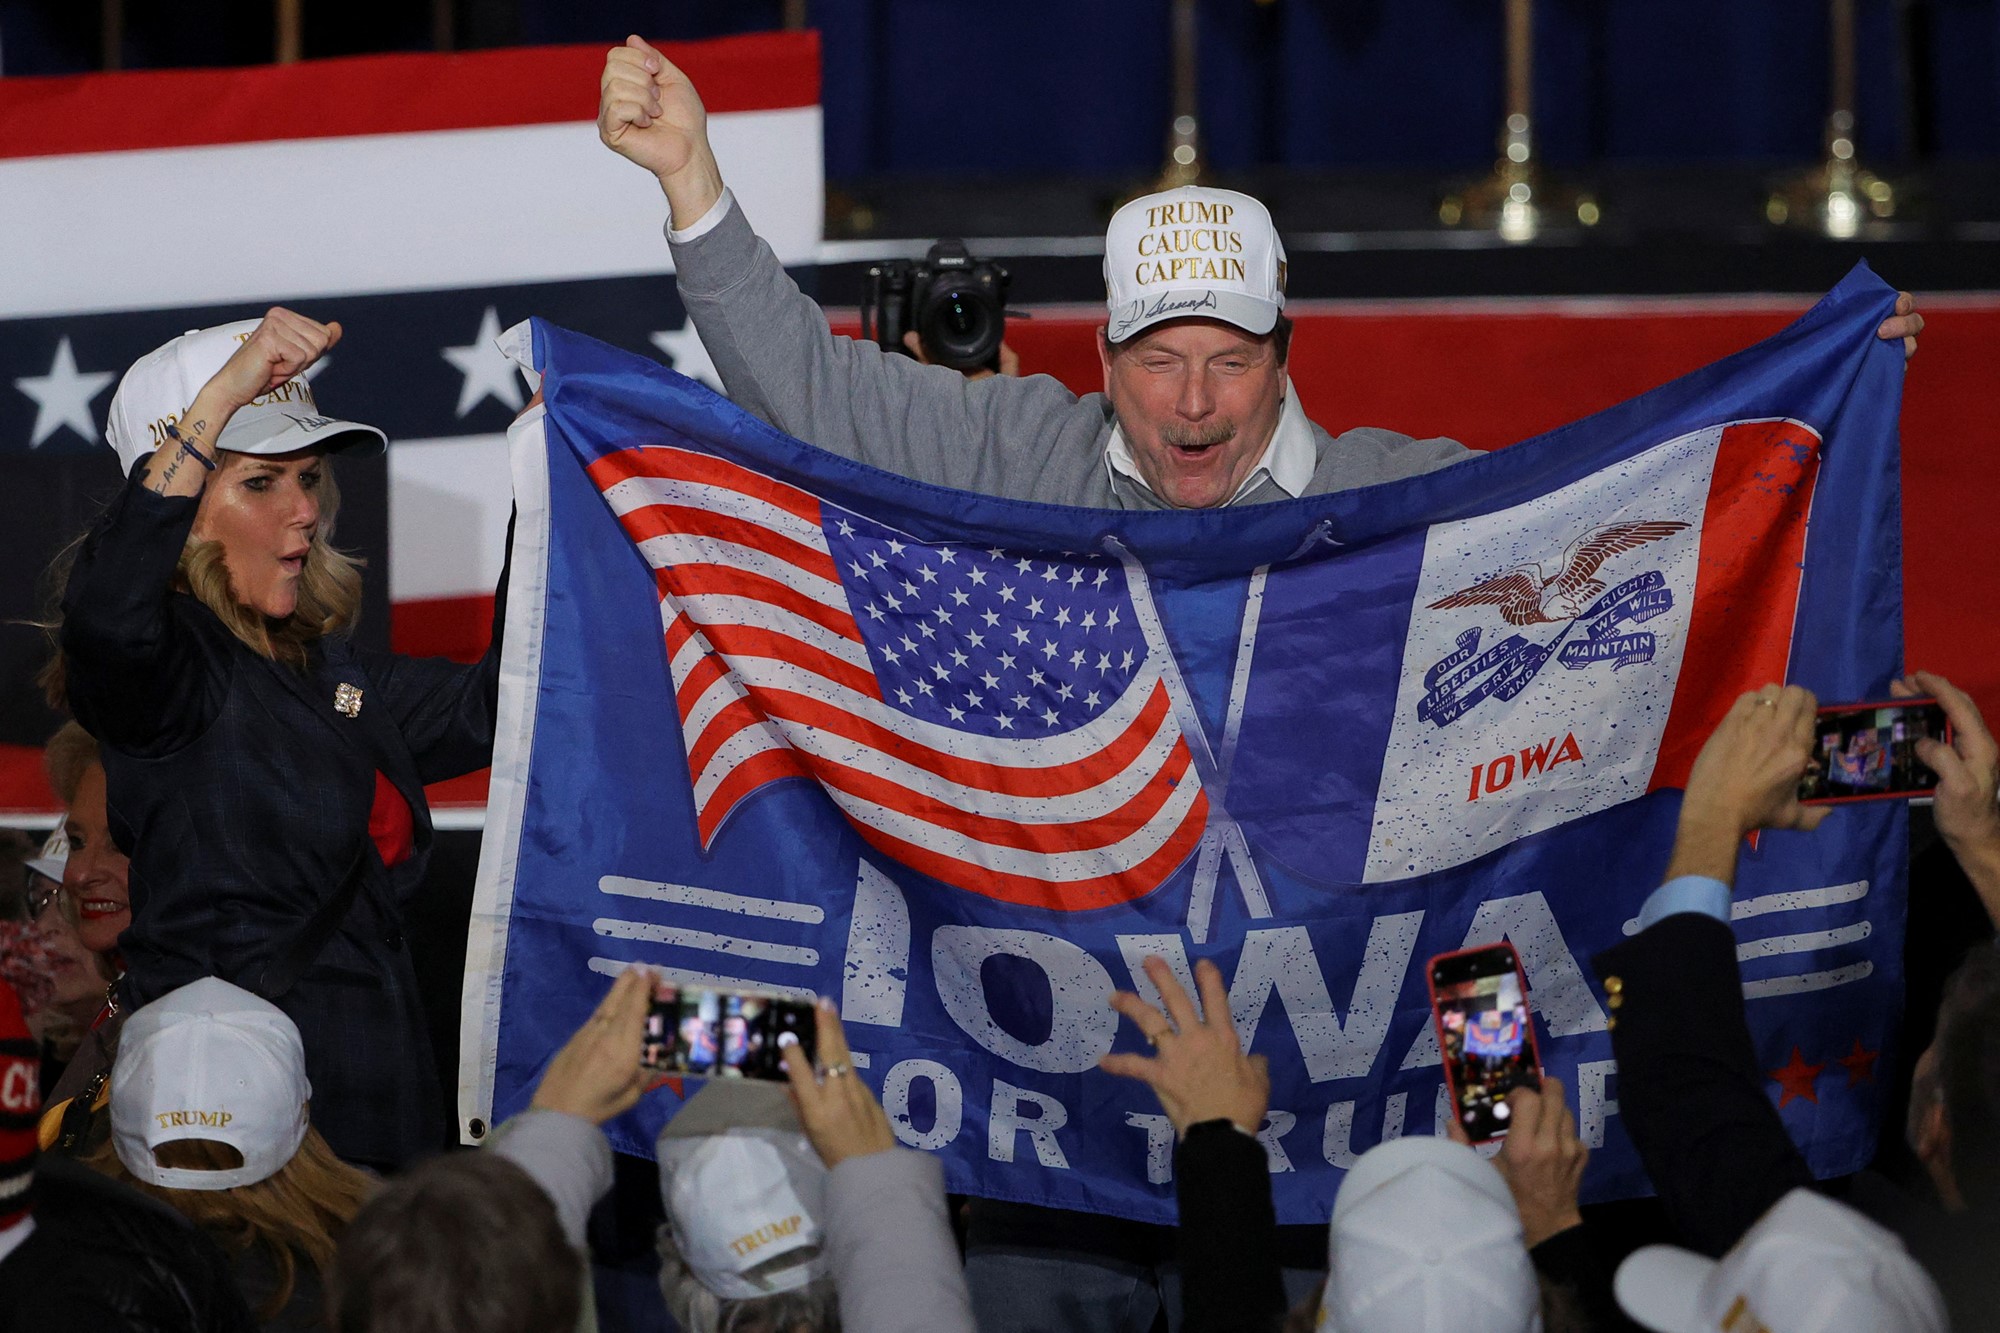 A man yells with joy while waving a blue IOWA FOR TRUMP flag